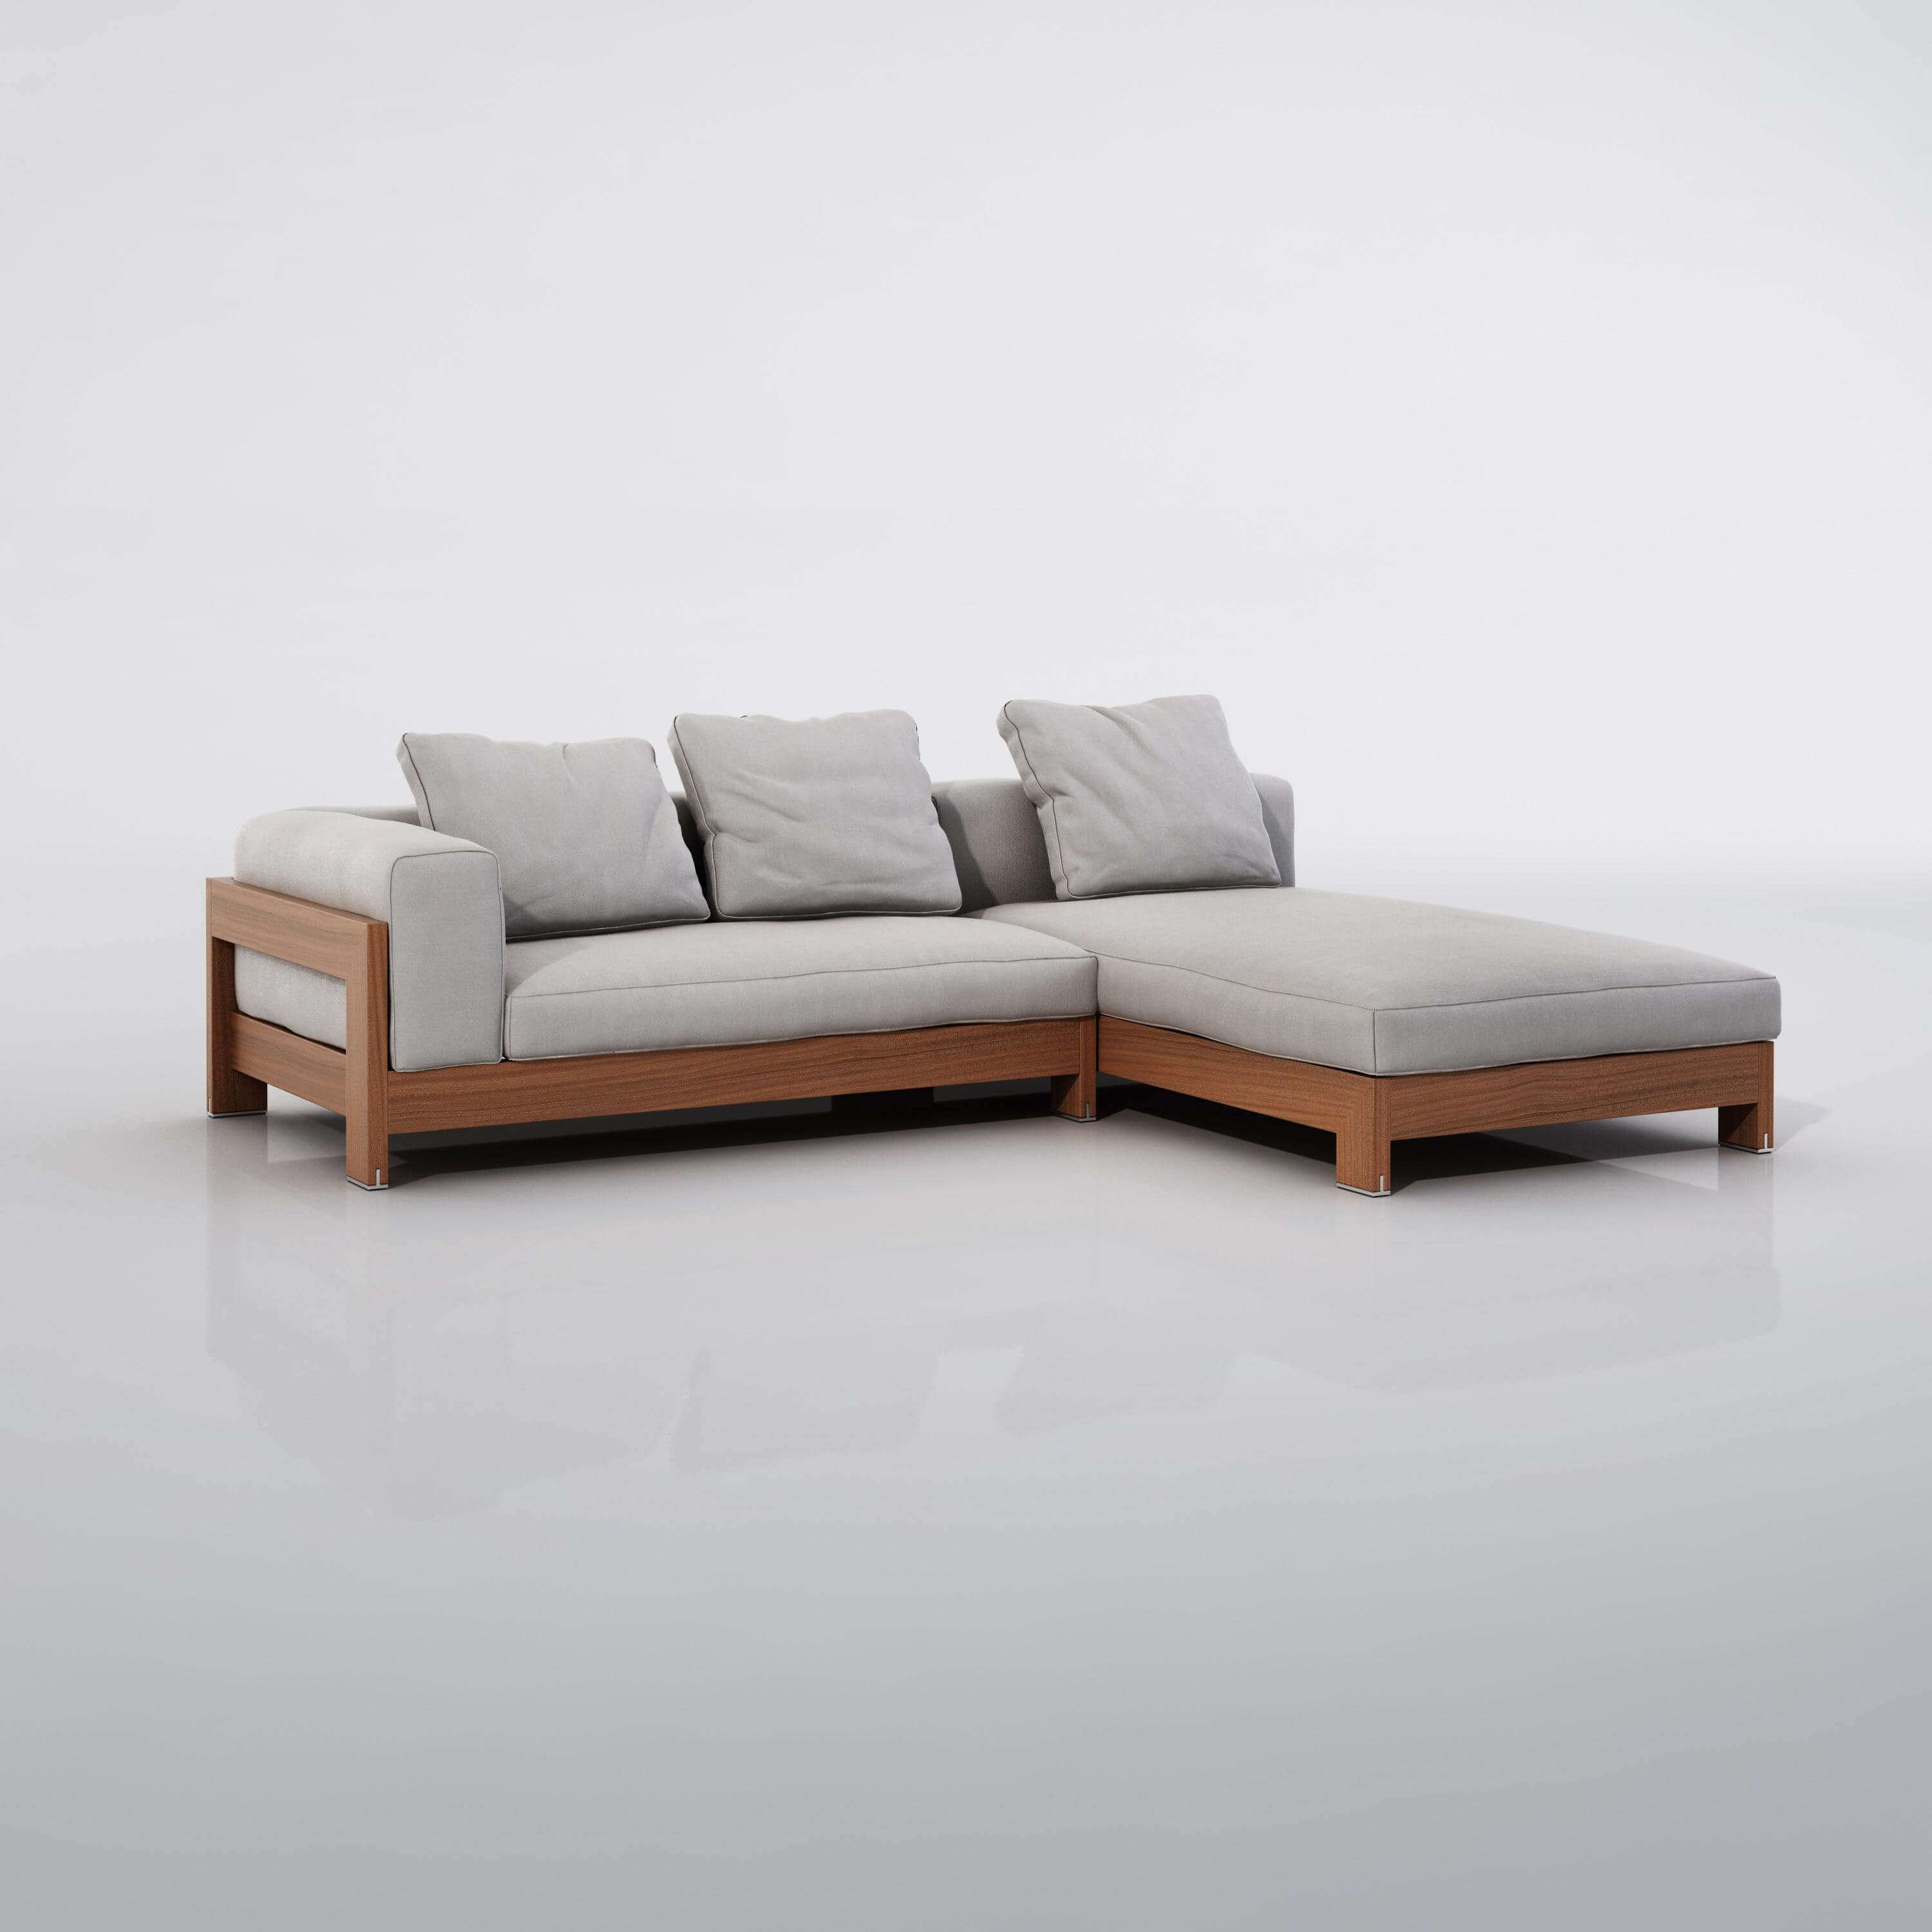 L-shaped wooden sofa set design - Sectional corner sofa - TimberCraft